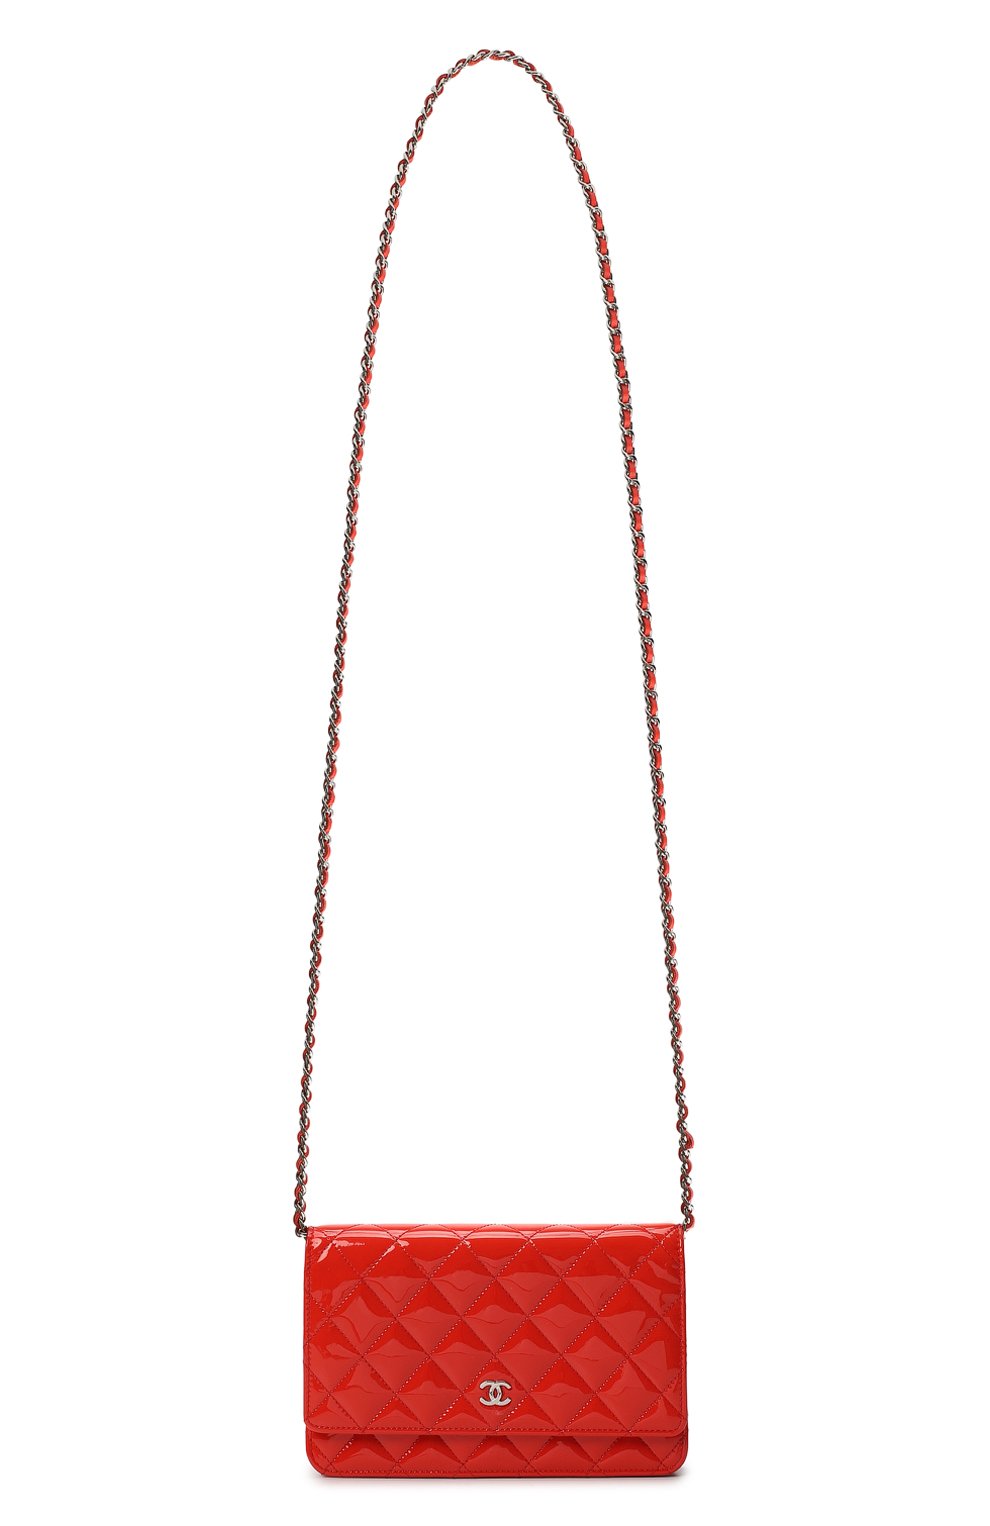 Сумка CC Wallet On Chain | Chanel | Красный - 8